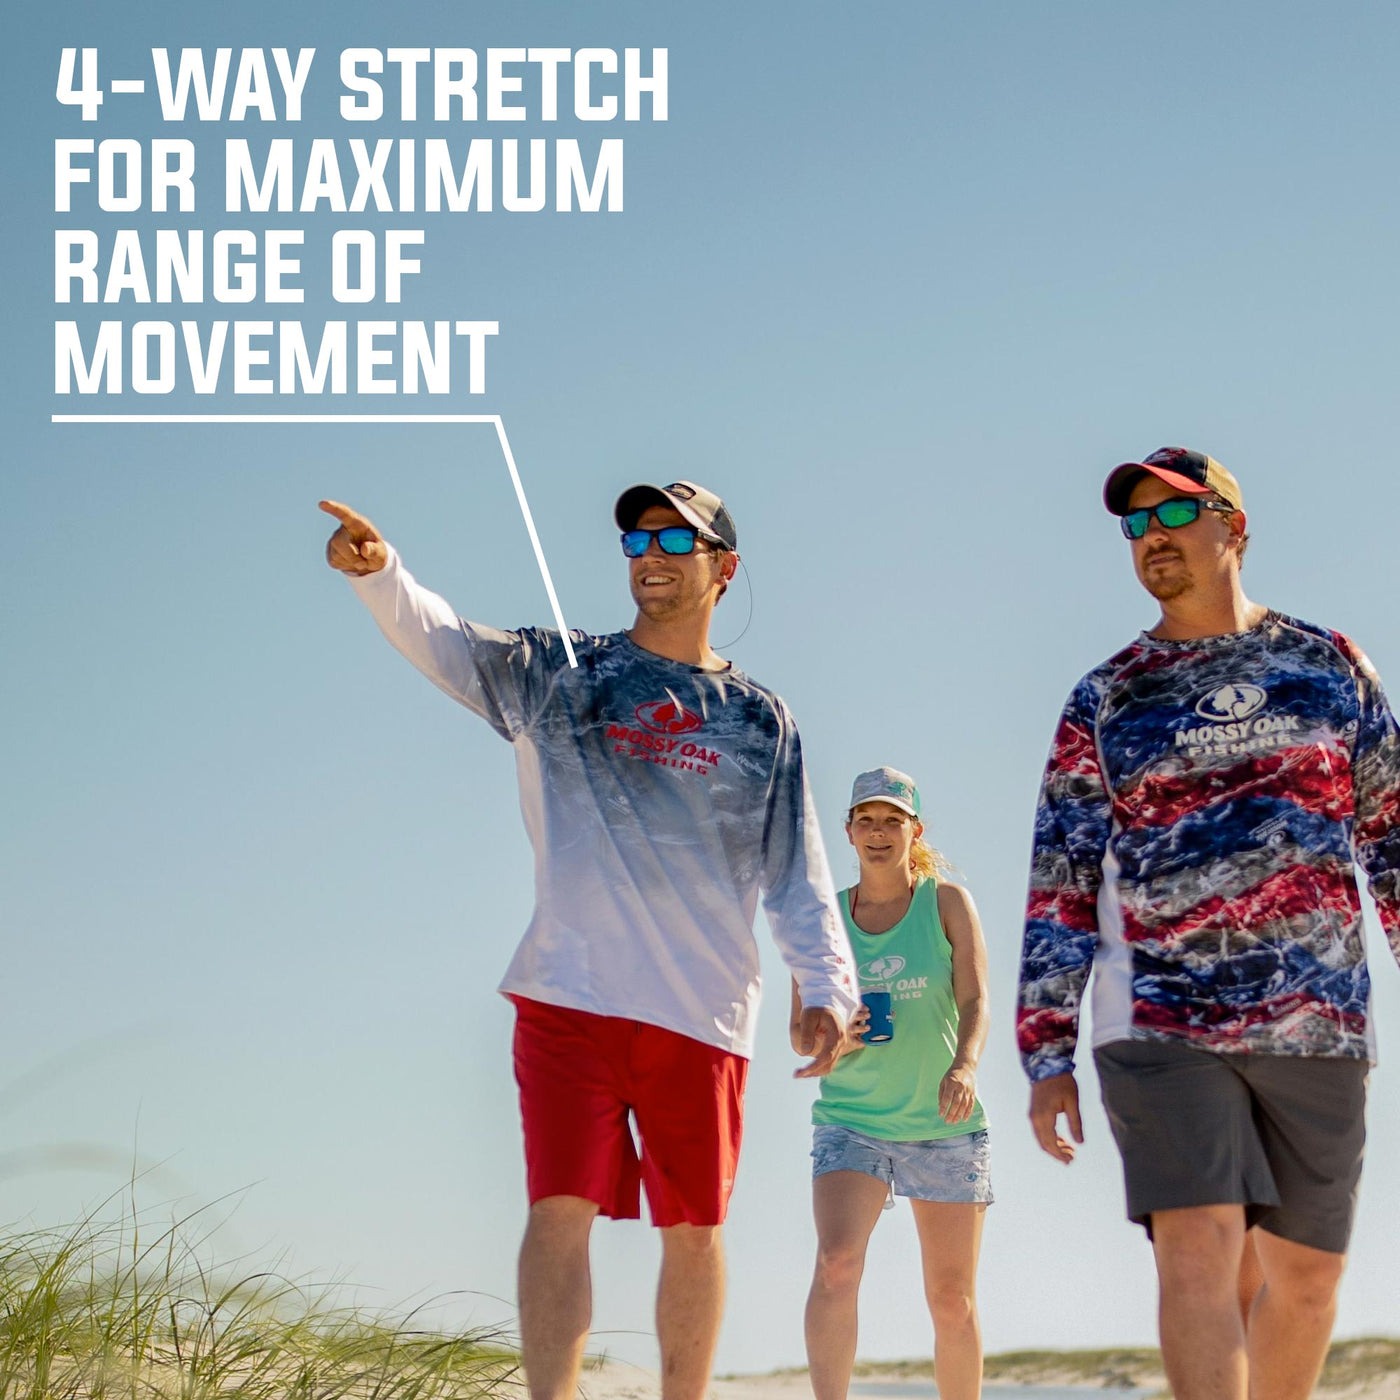 Mossy Oak Fishing Red, White & Blue Tech Long Sleeve Shirt 4-Way Stretch for Maximum Range of Movement